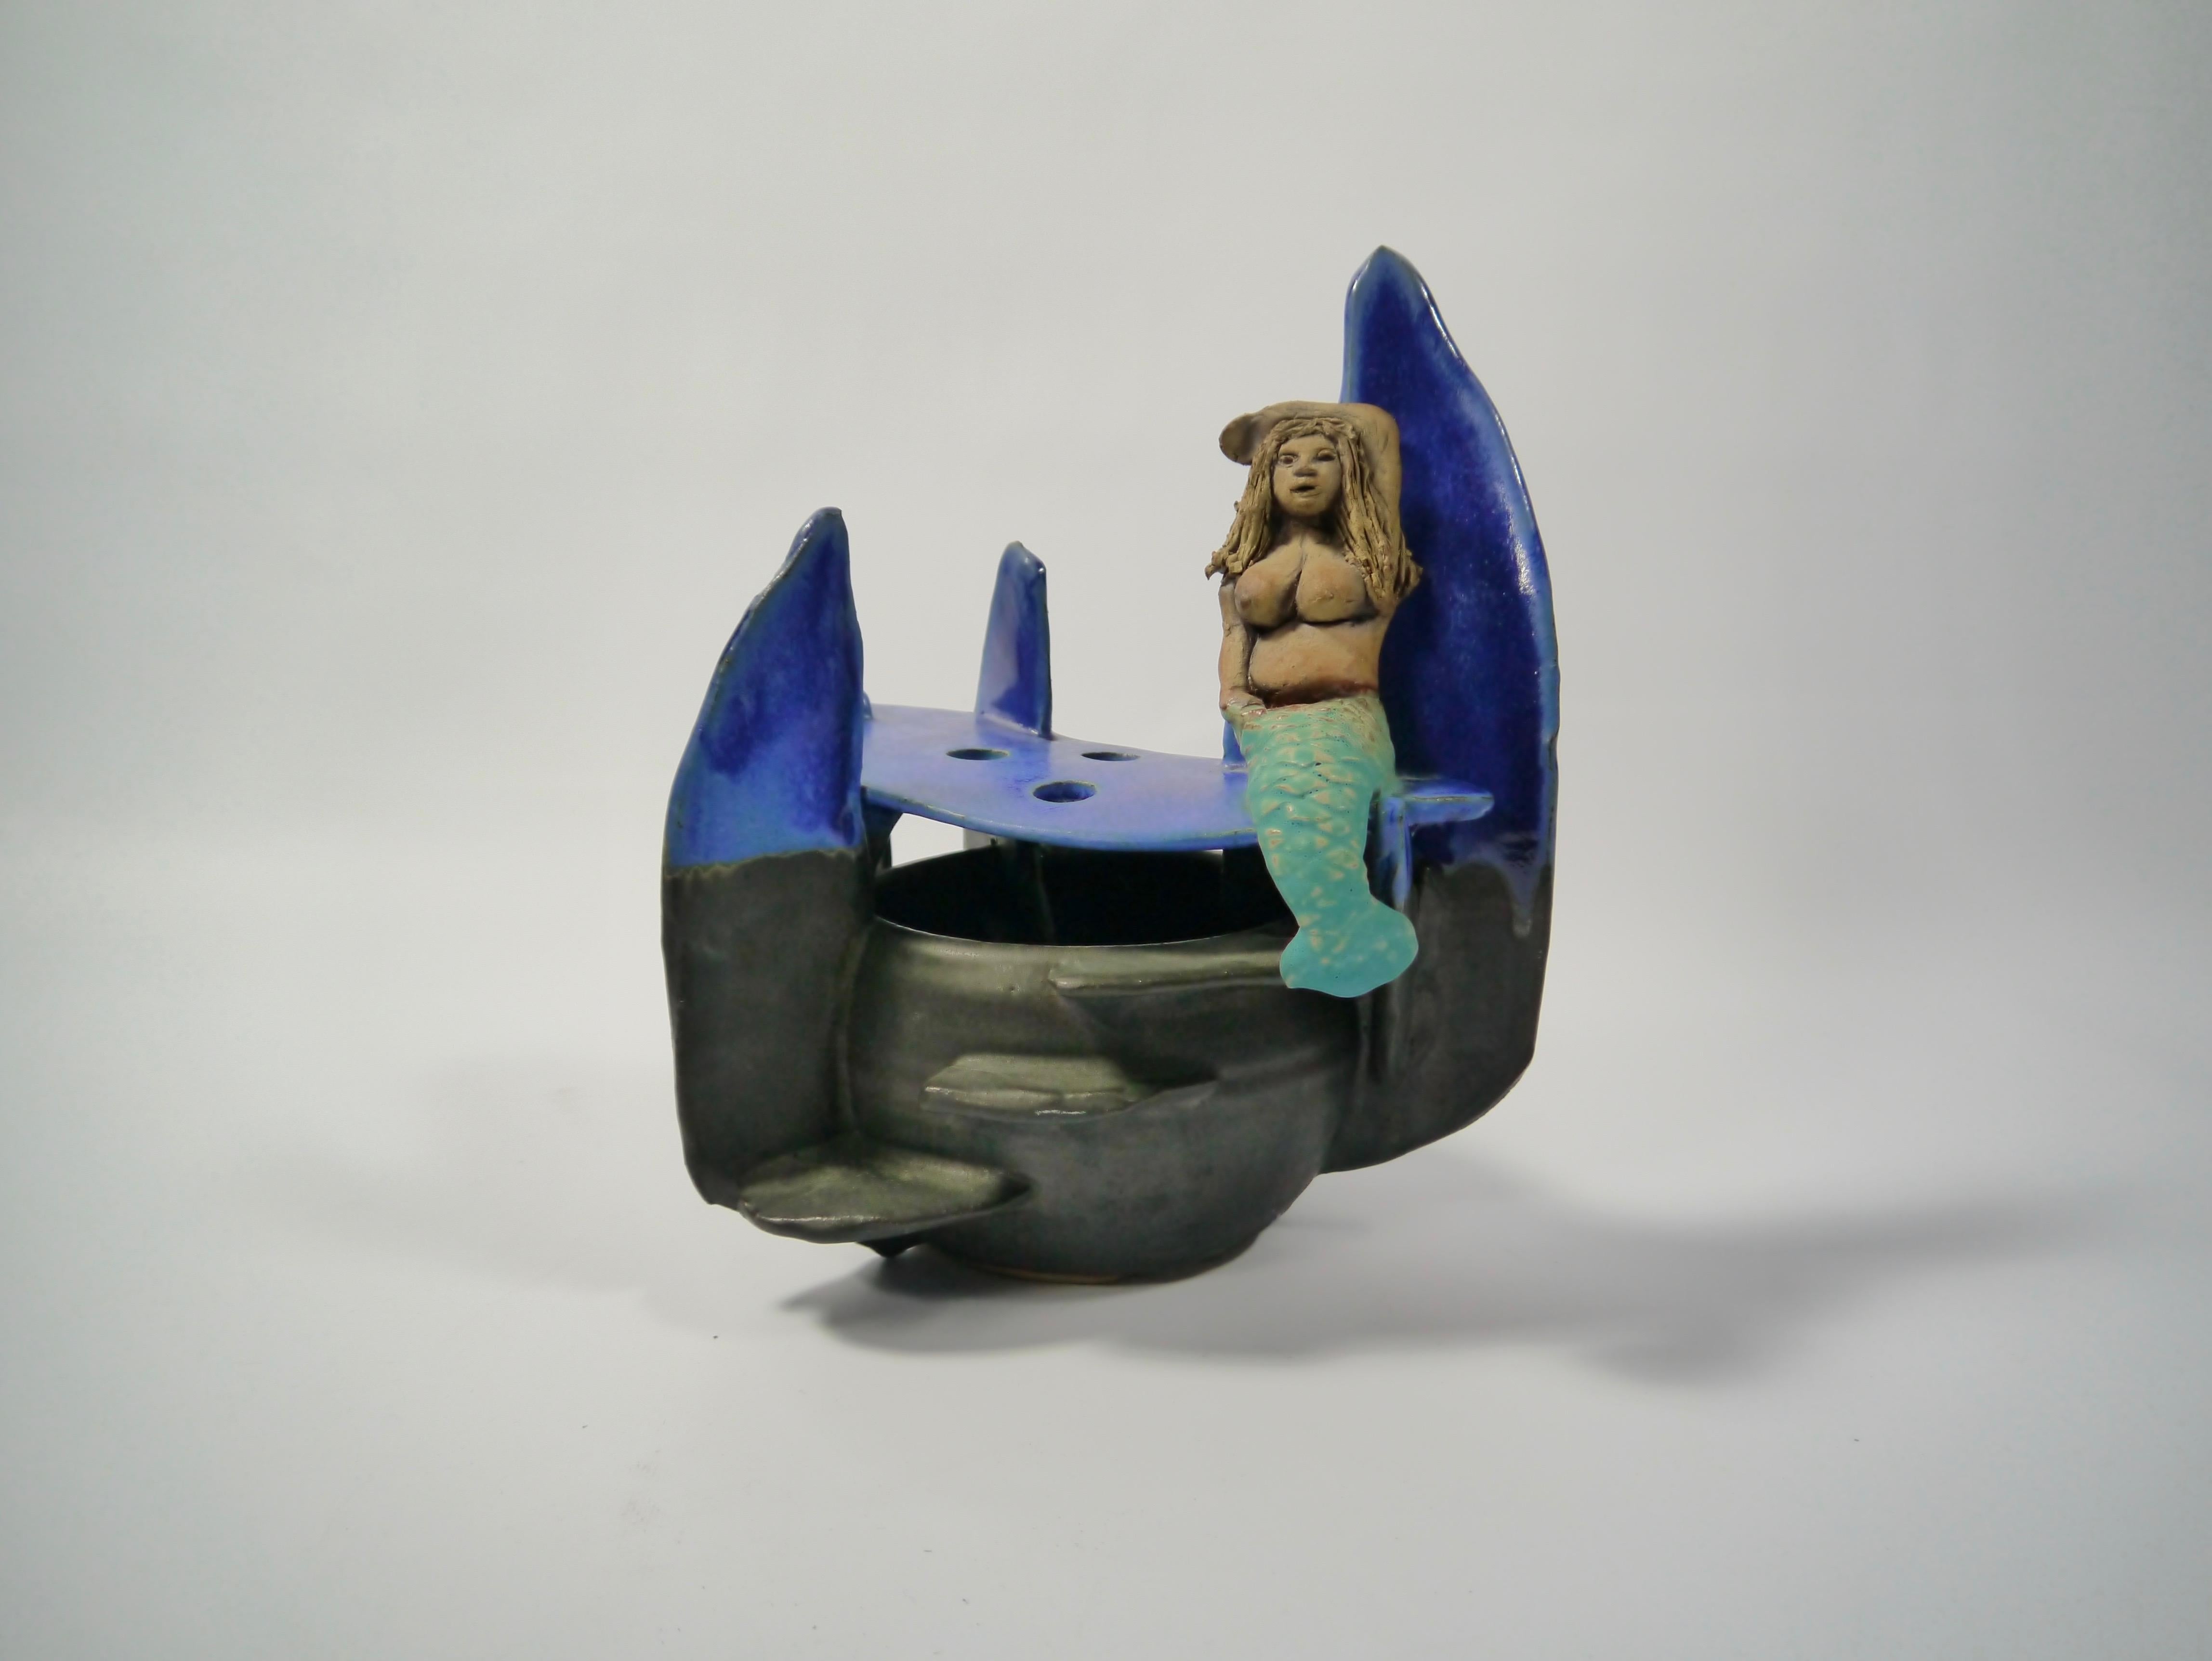 Naive and kitsch ceramic mermaid sculpture / vase made by Norwegian artist Rein Follestad.